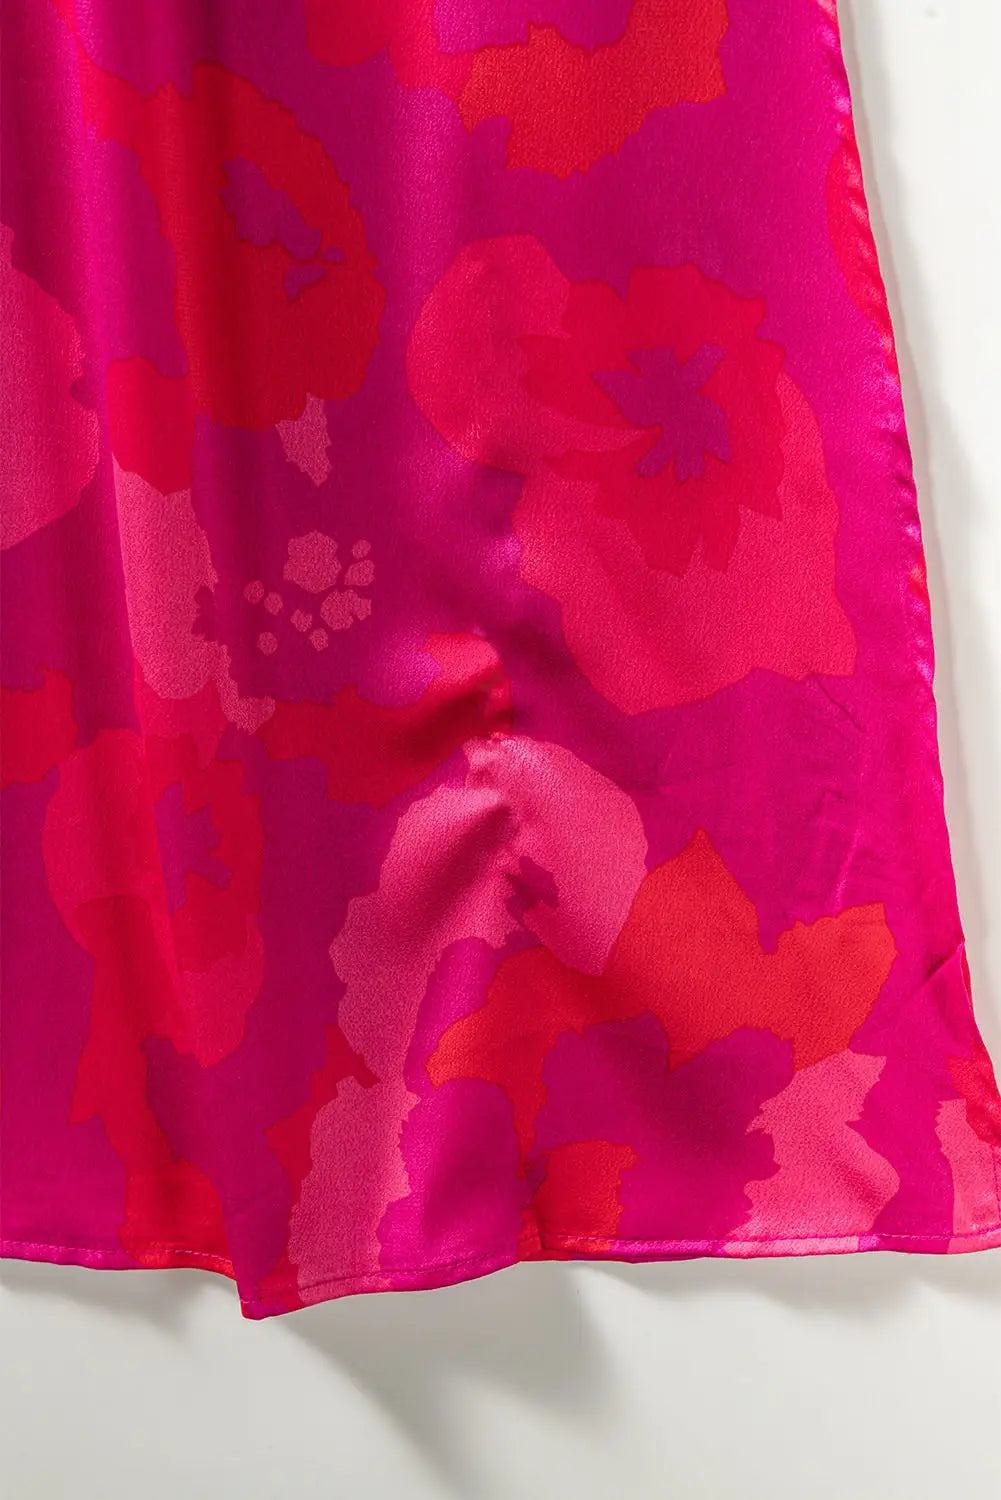 Rose abstract floral print v neck dolman maxi dress - dresses